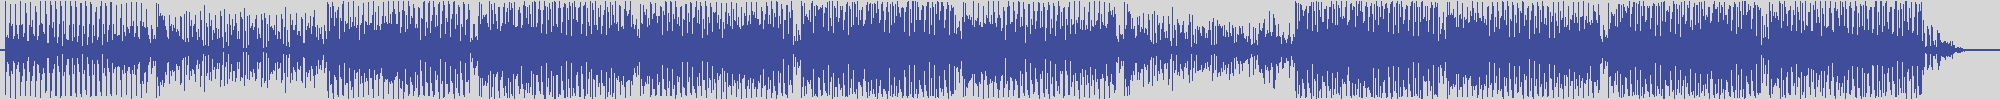 nf_boyz_records [NFY066] Anthony Maserati - Run [The Razor Mix] audio wave form